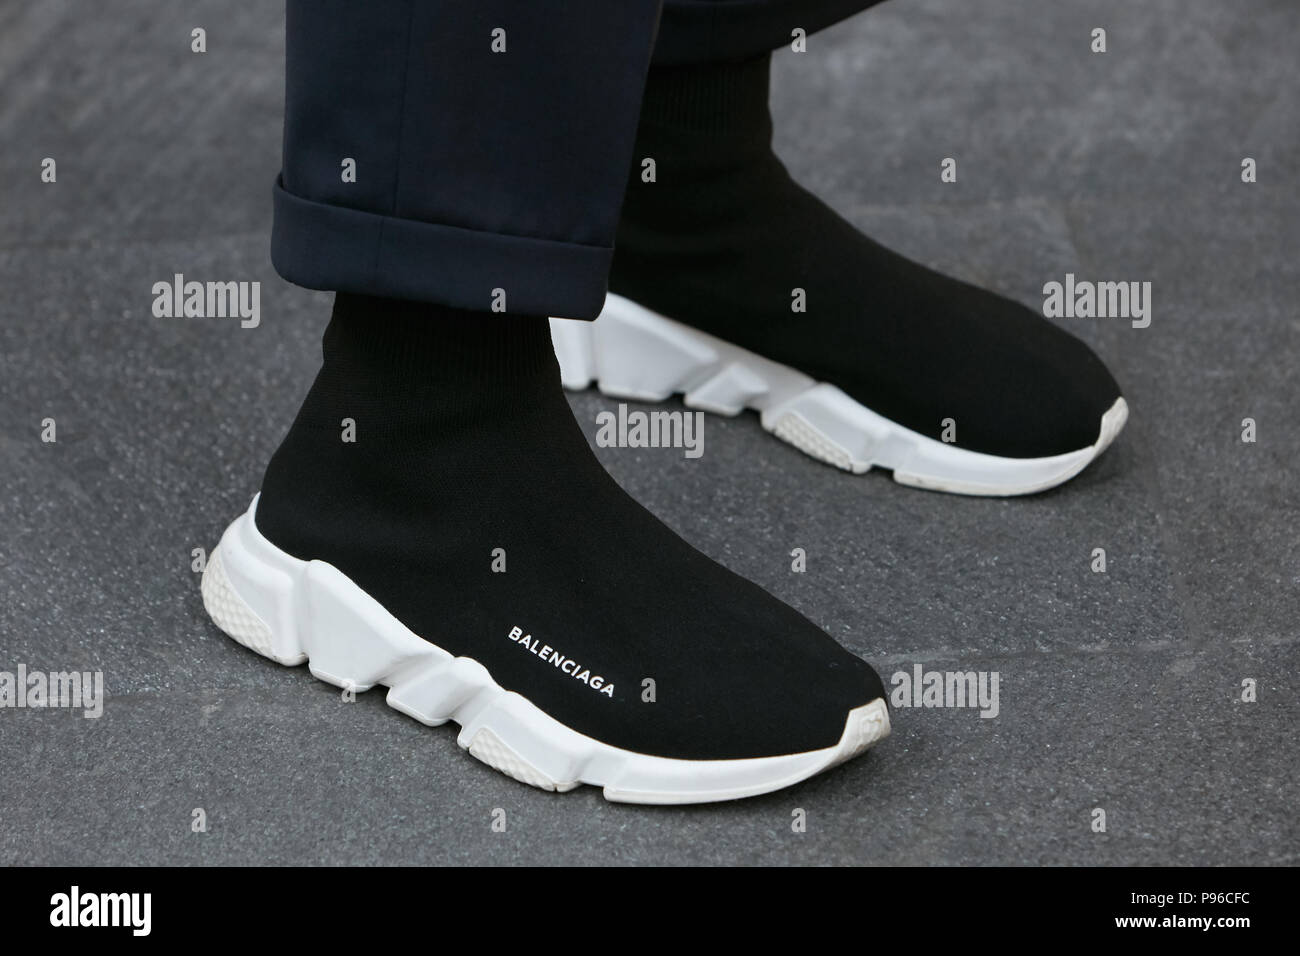 Eslovenia Críticamente Tomar medicina Milán - Junio 18: Hombre con Balenciaga zapatos en blanco y negro antes de  Giorgio Armani Fashion